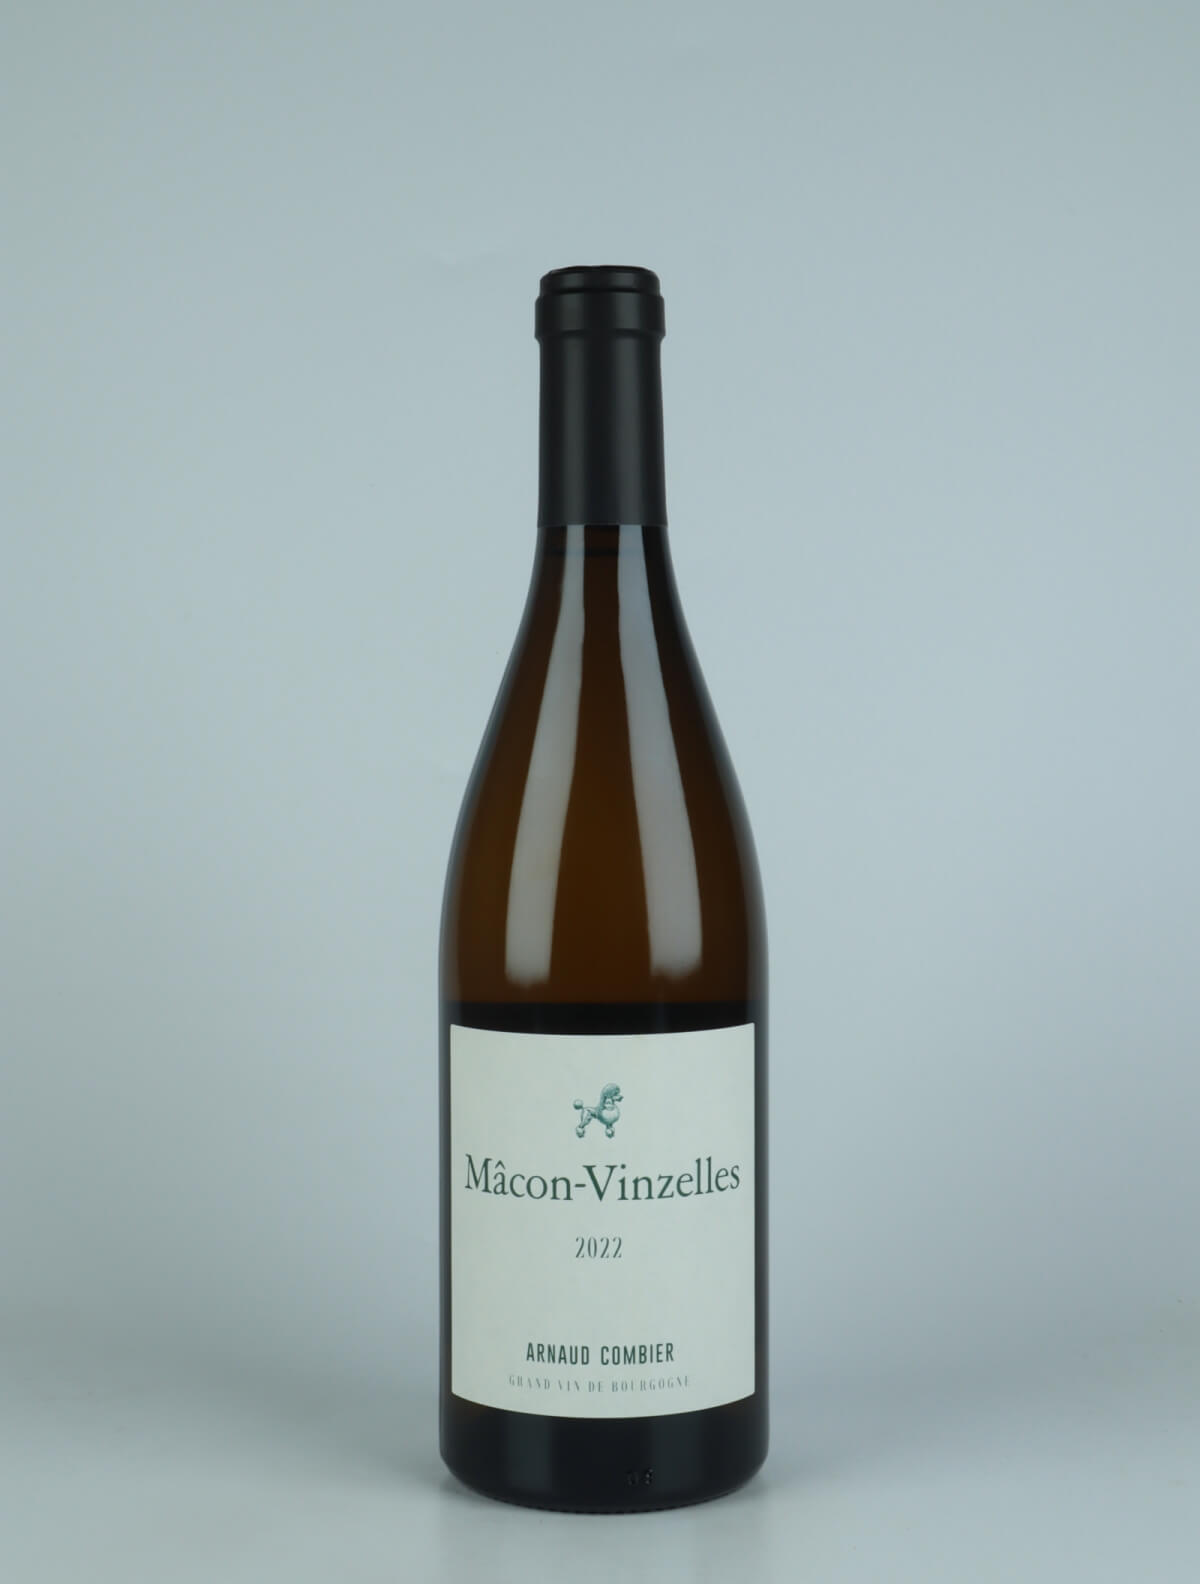 A bottle 2022 Mâcon Vinzelles White wine from Arnaud Combier, Burgundy in France